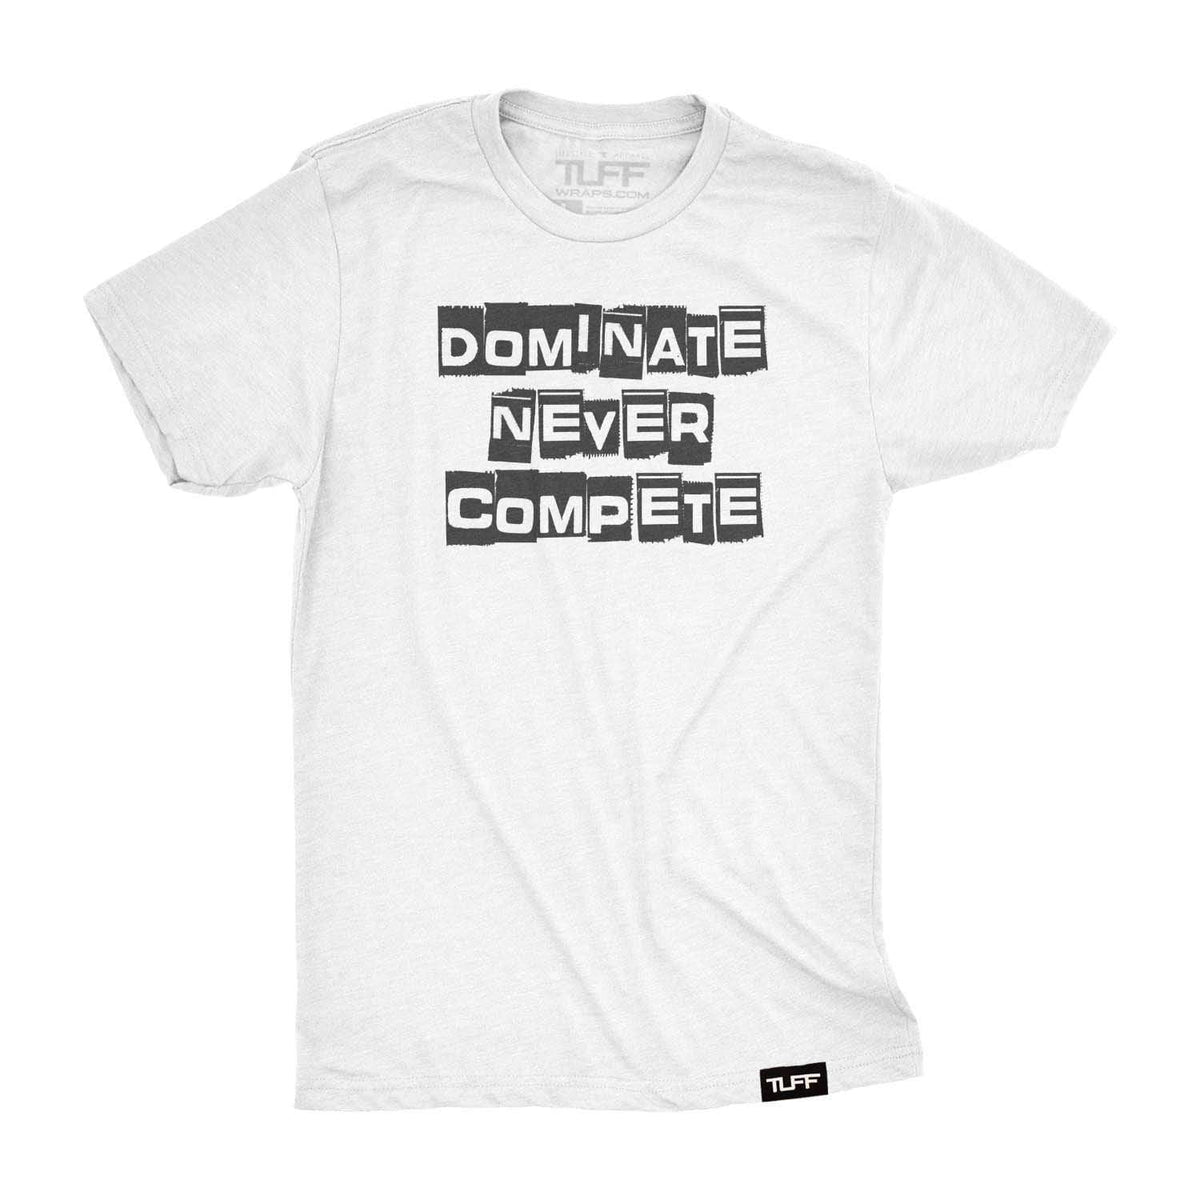 Dominate Never Compete Tee S / White TuffWraps.com